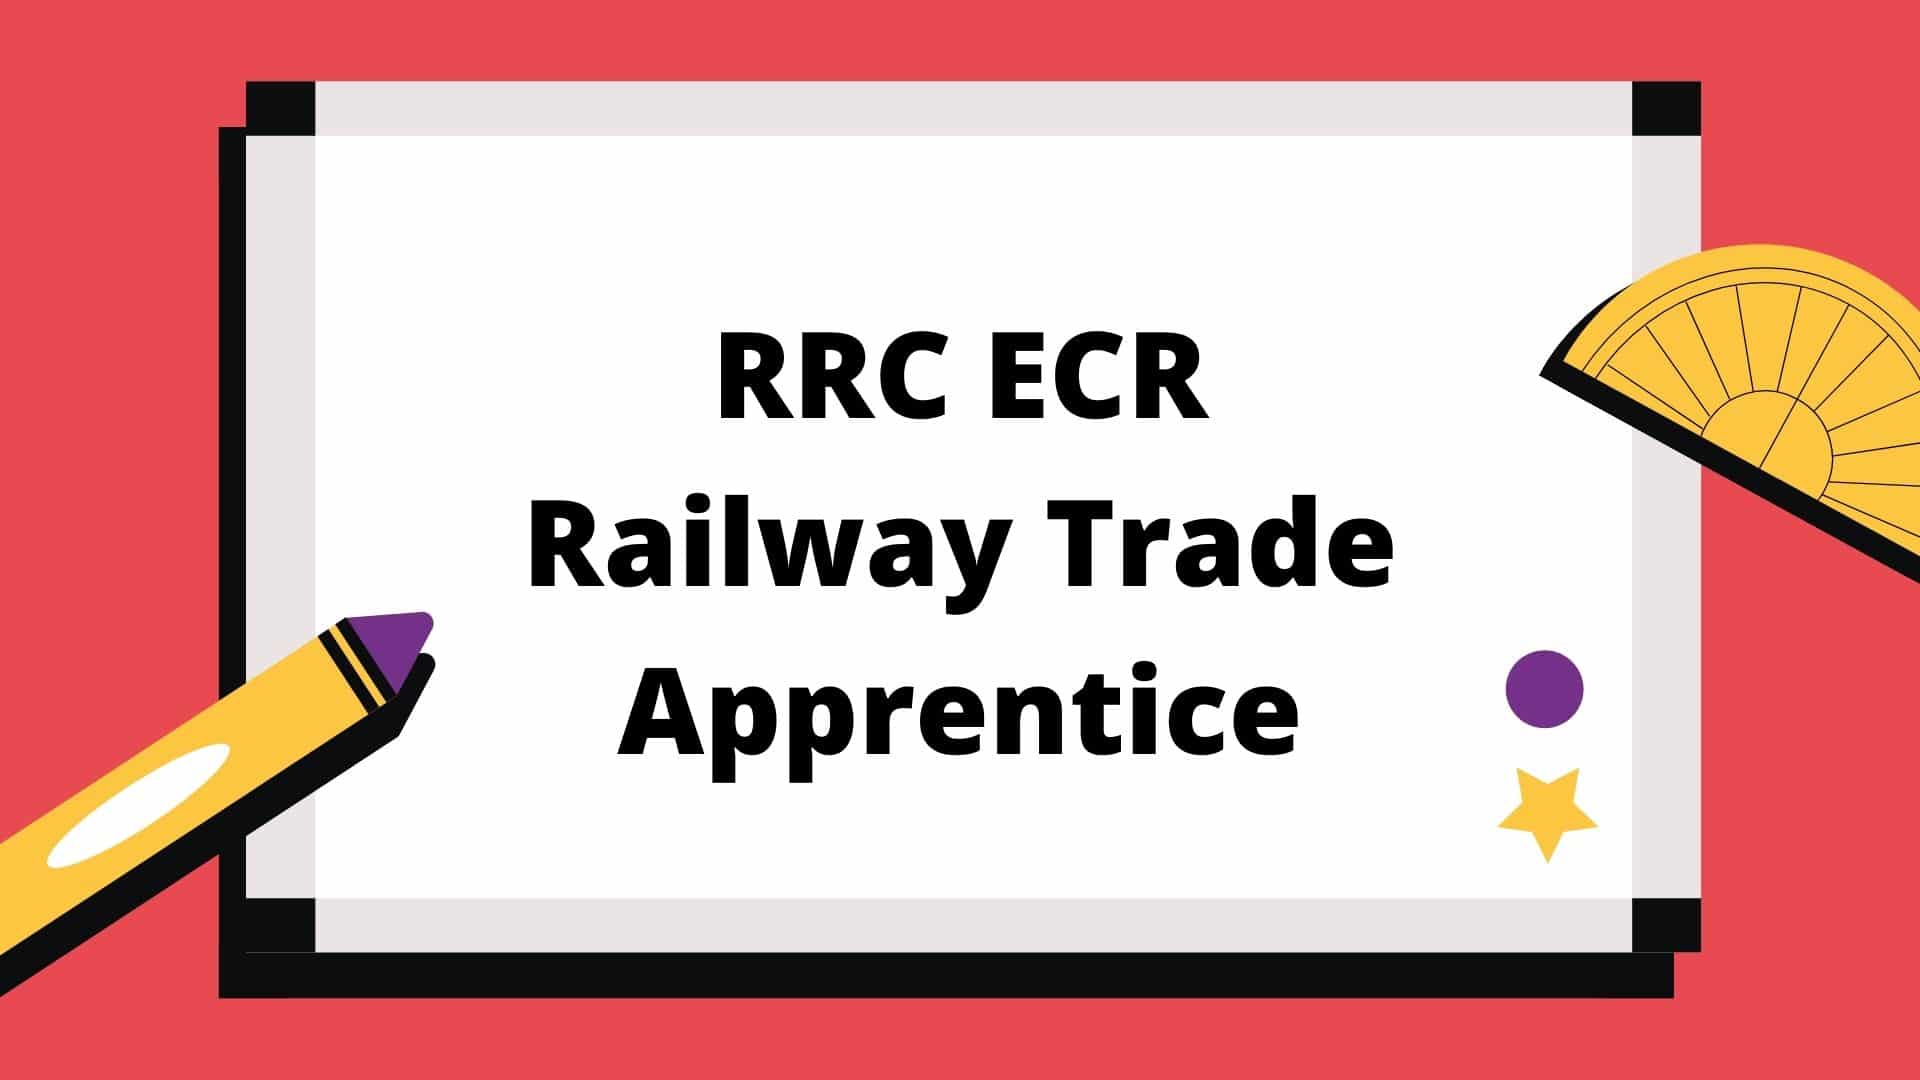 RRC ECR Railway Trade Apprentice